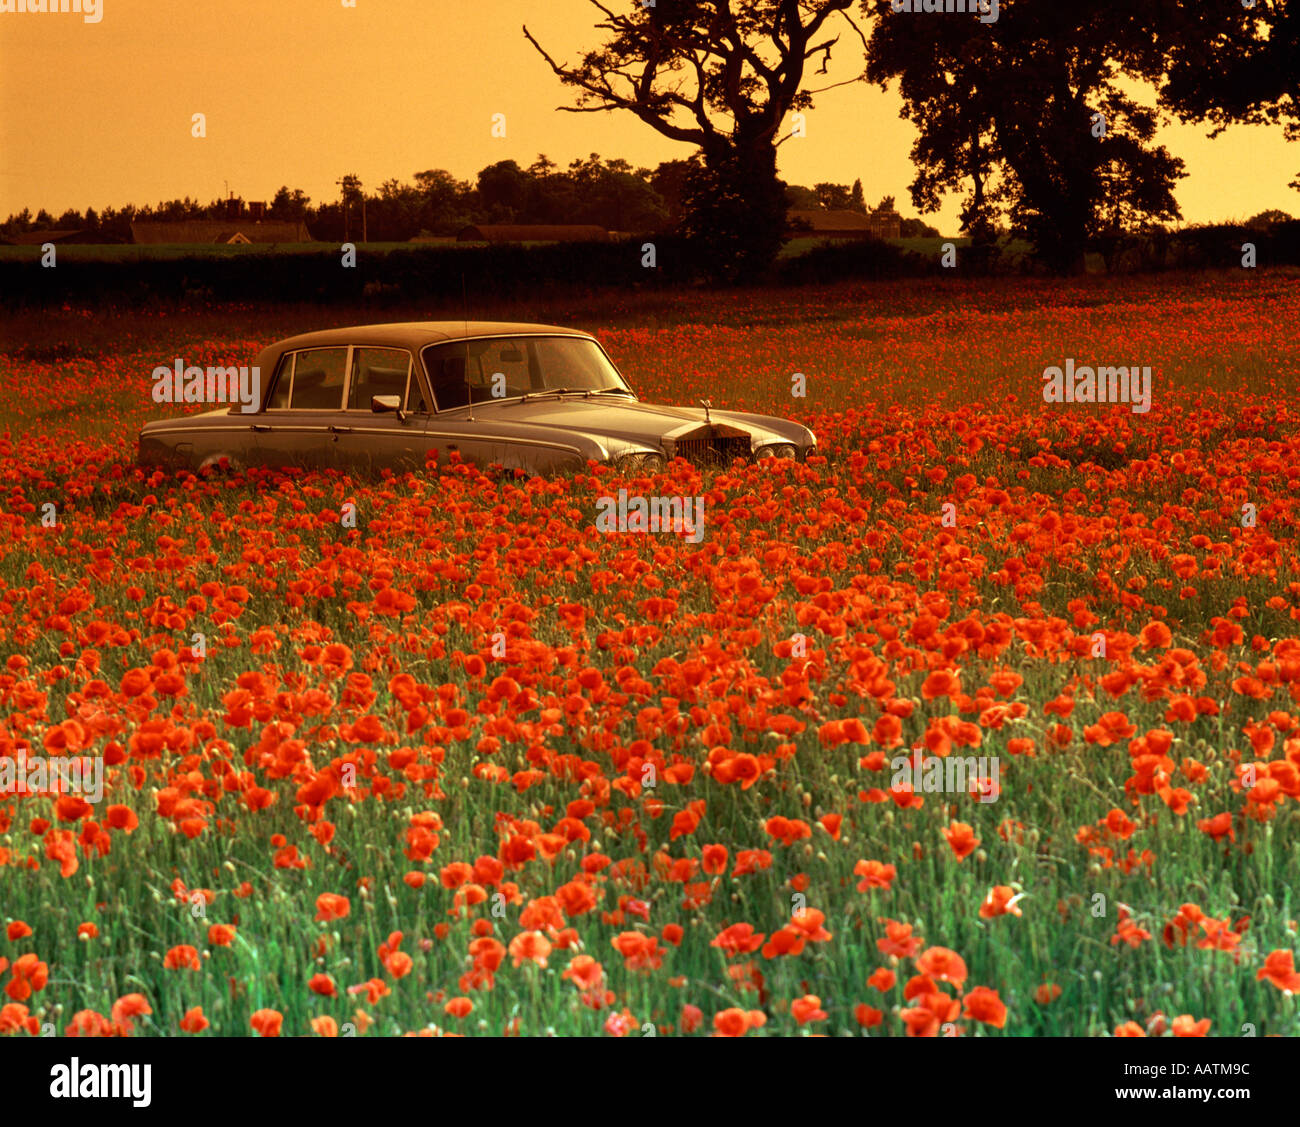 A Rolls Royce in a field of poppies Stock Photo - Alamy